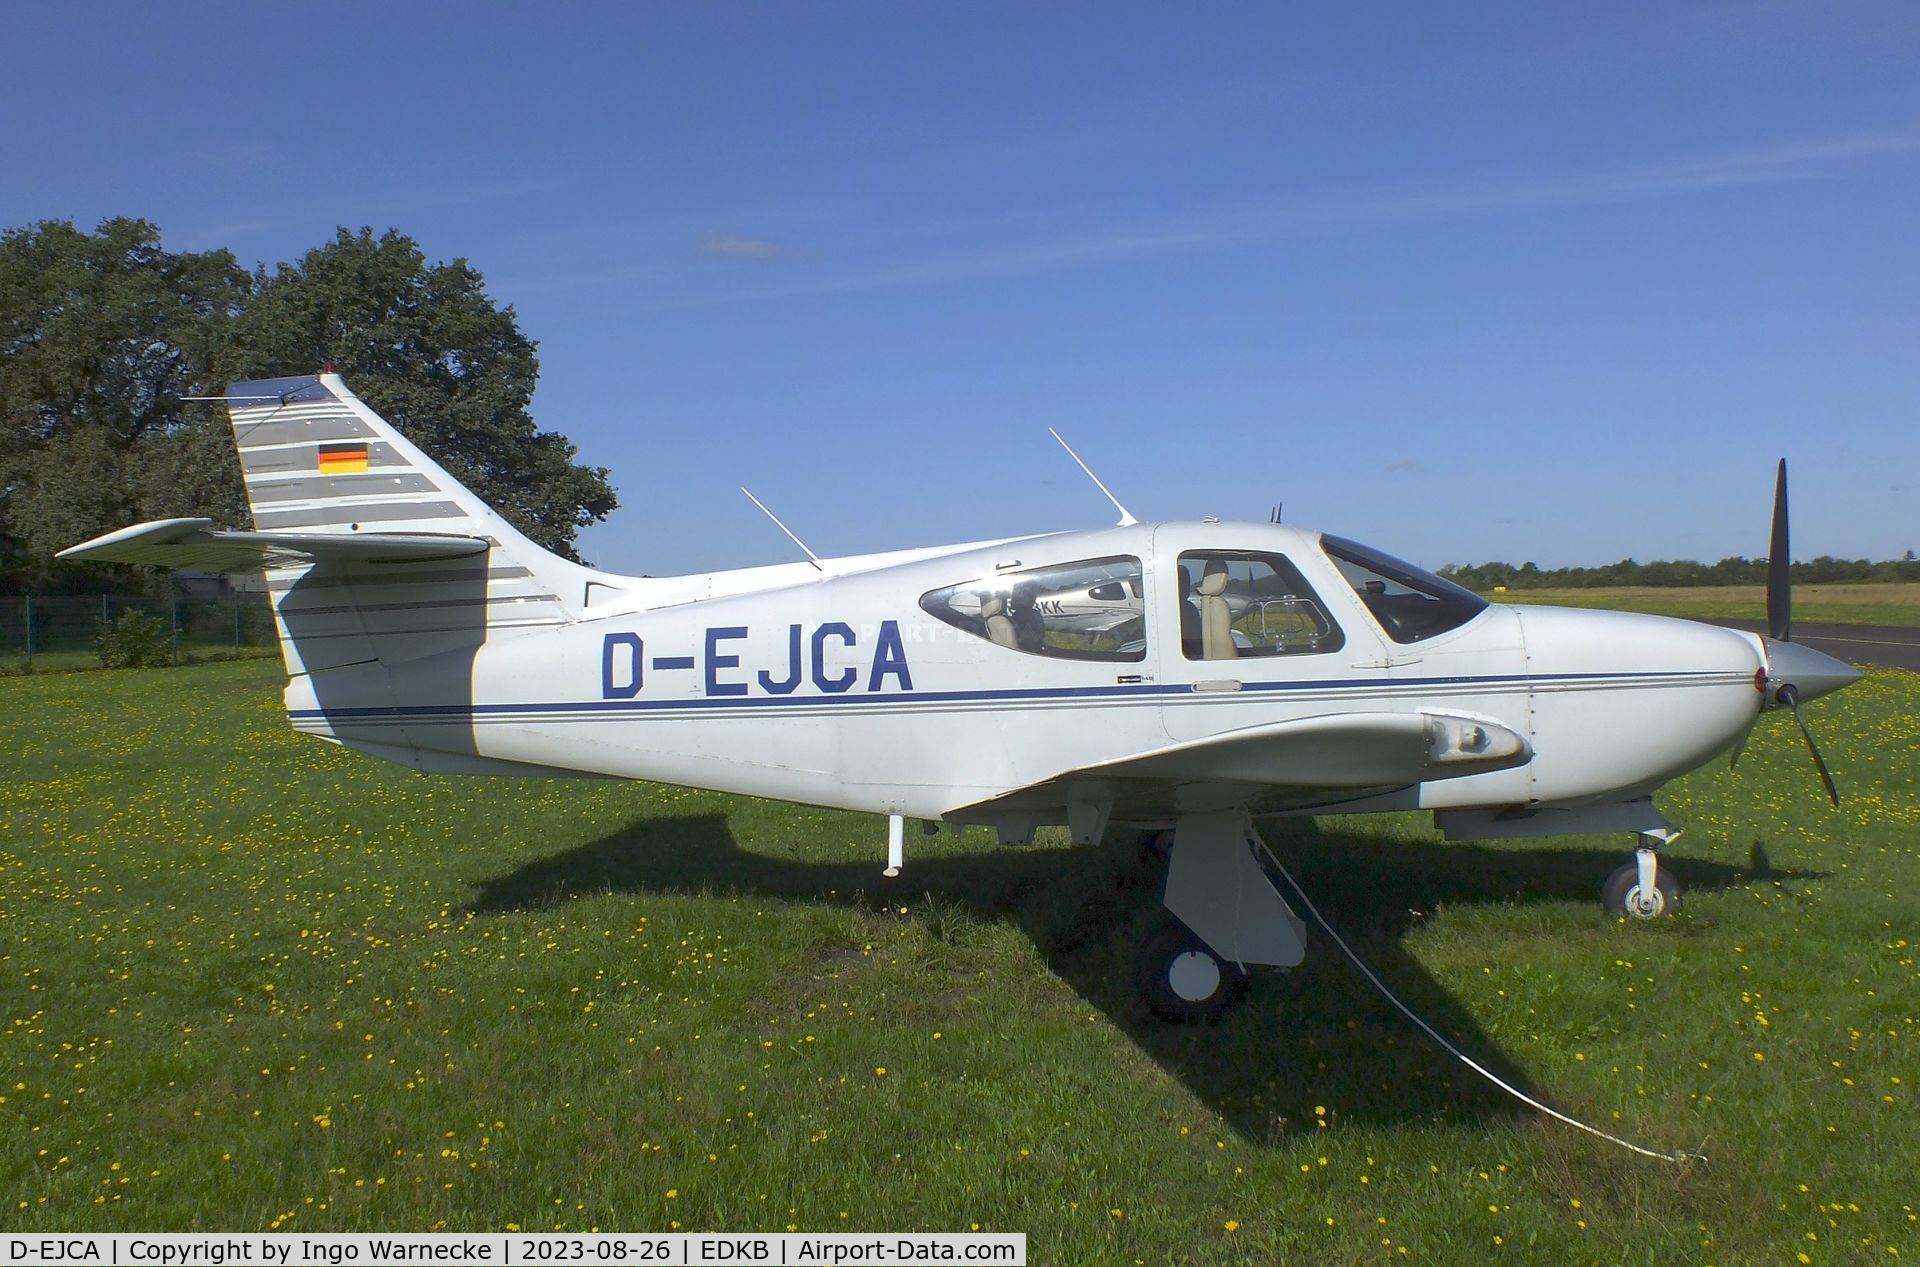 D-EJCA, 1992 Rockwell Commander 114B C/N 14544, Rockwell Commander 114B at Bonn-Hangelar airfield during the Grumman Fly-in 2023